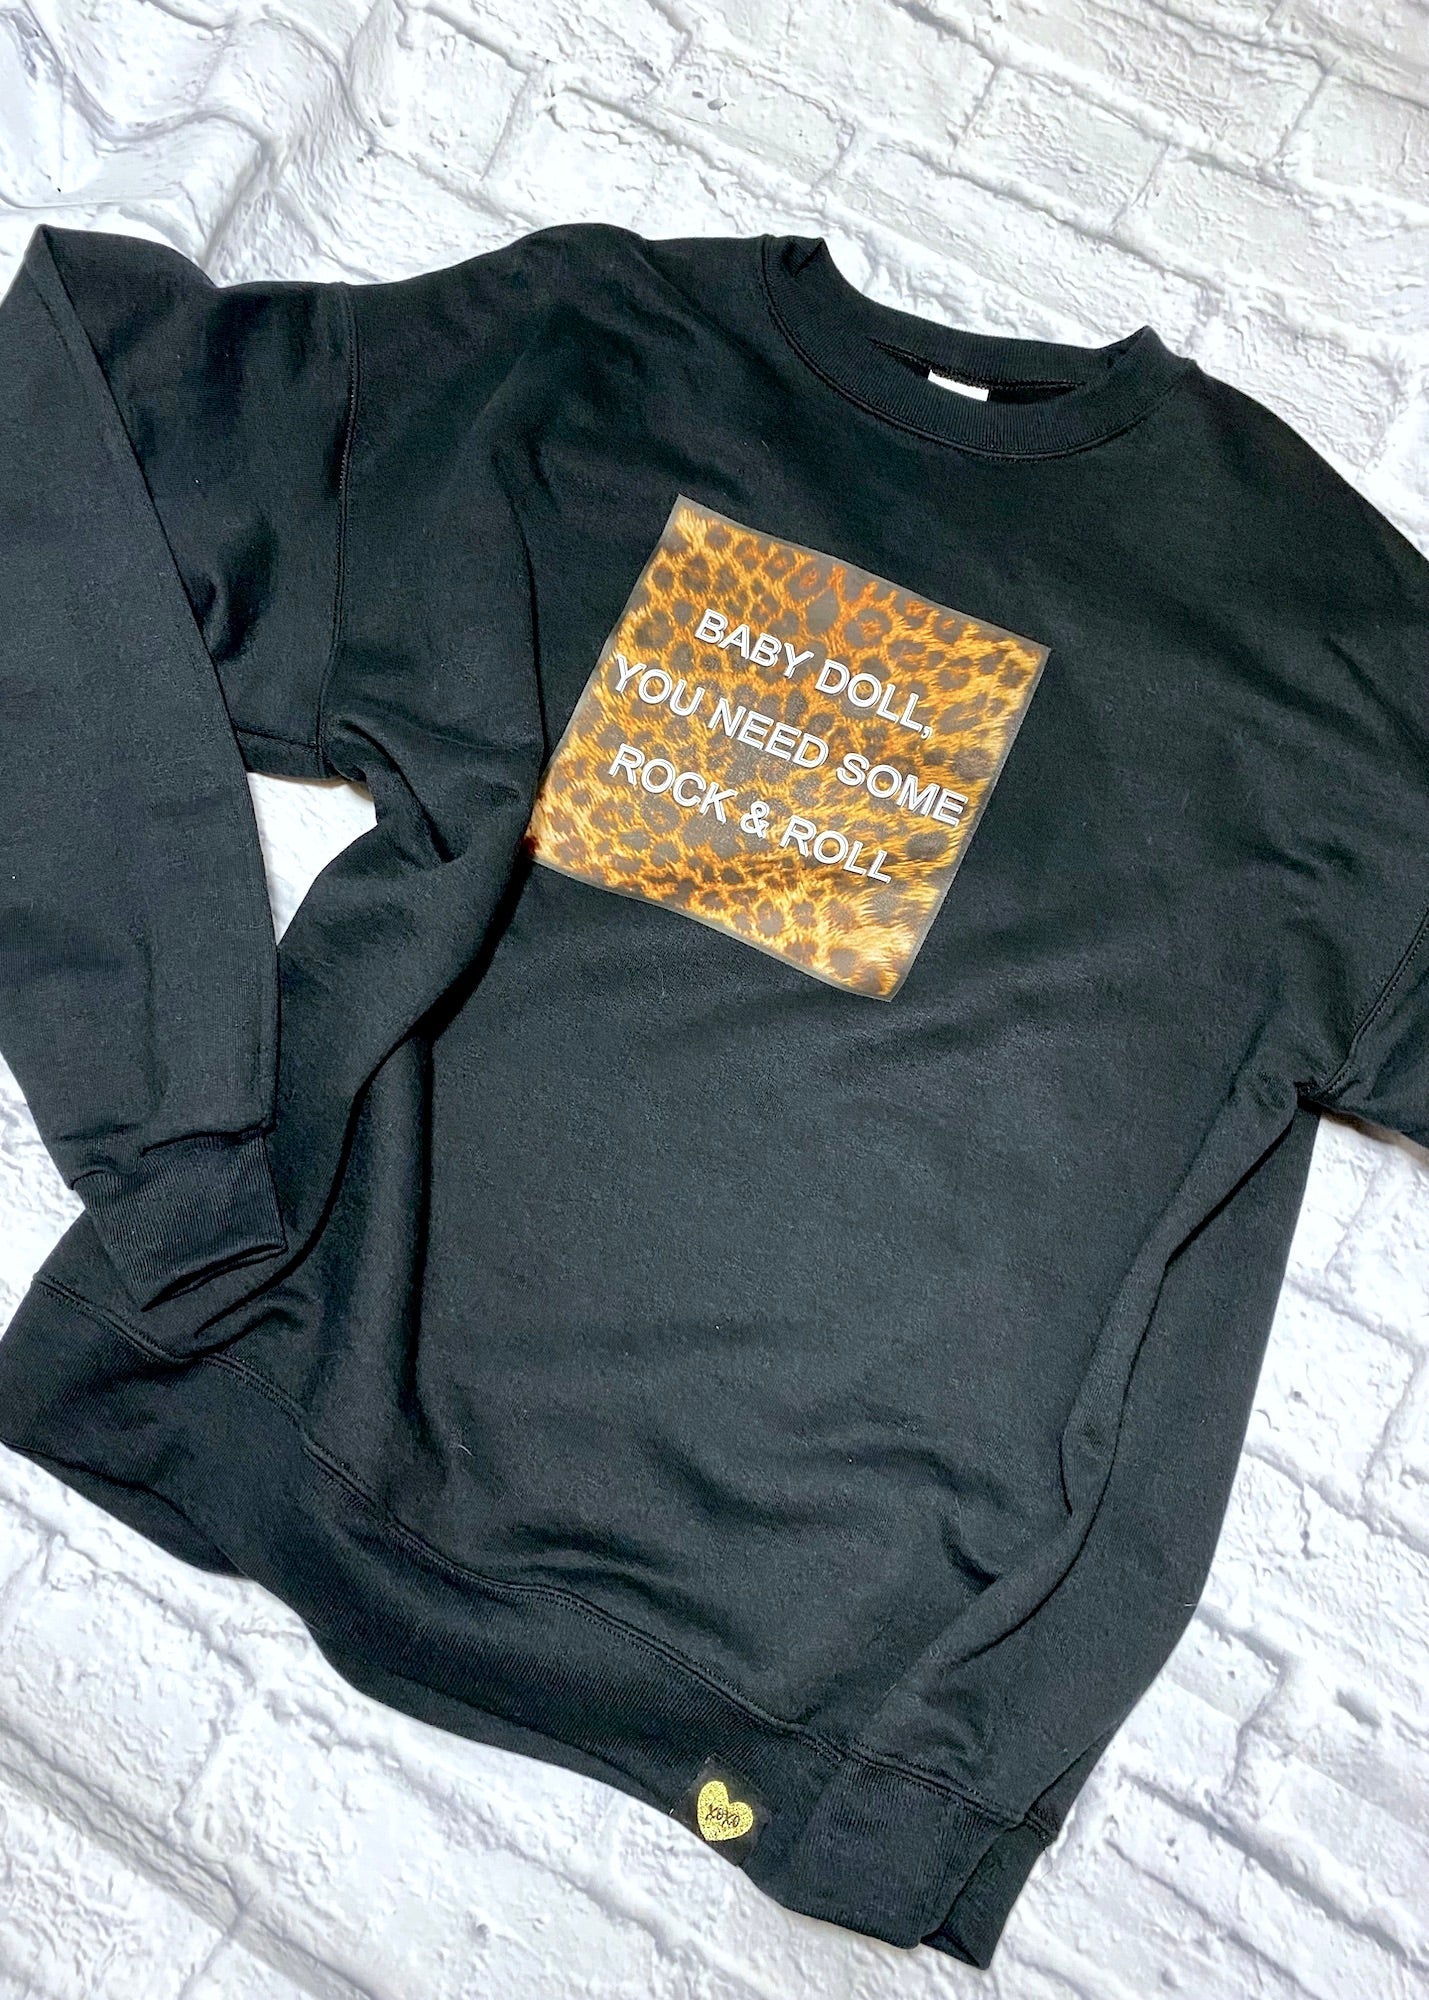 "Baby Doll You Need Some Rock N Roll" Leopard Print Sweatshirt